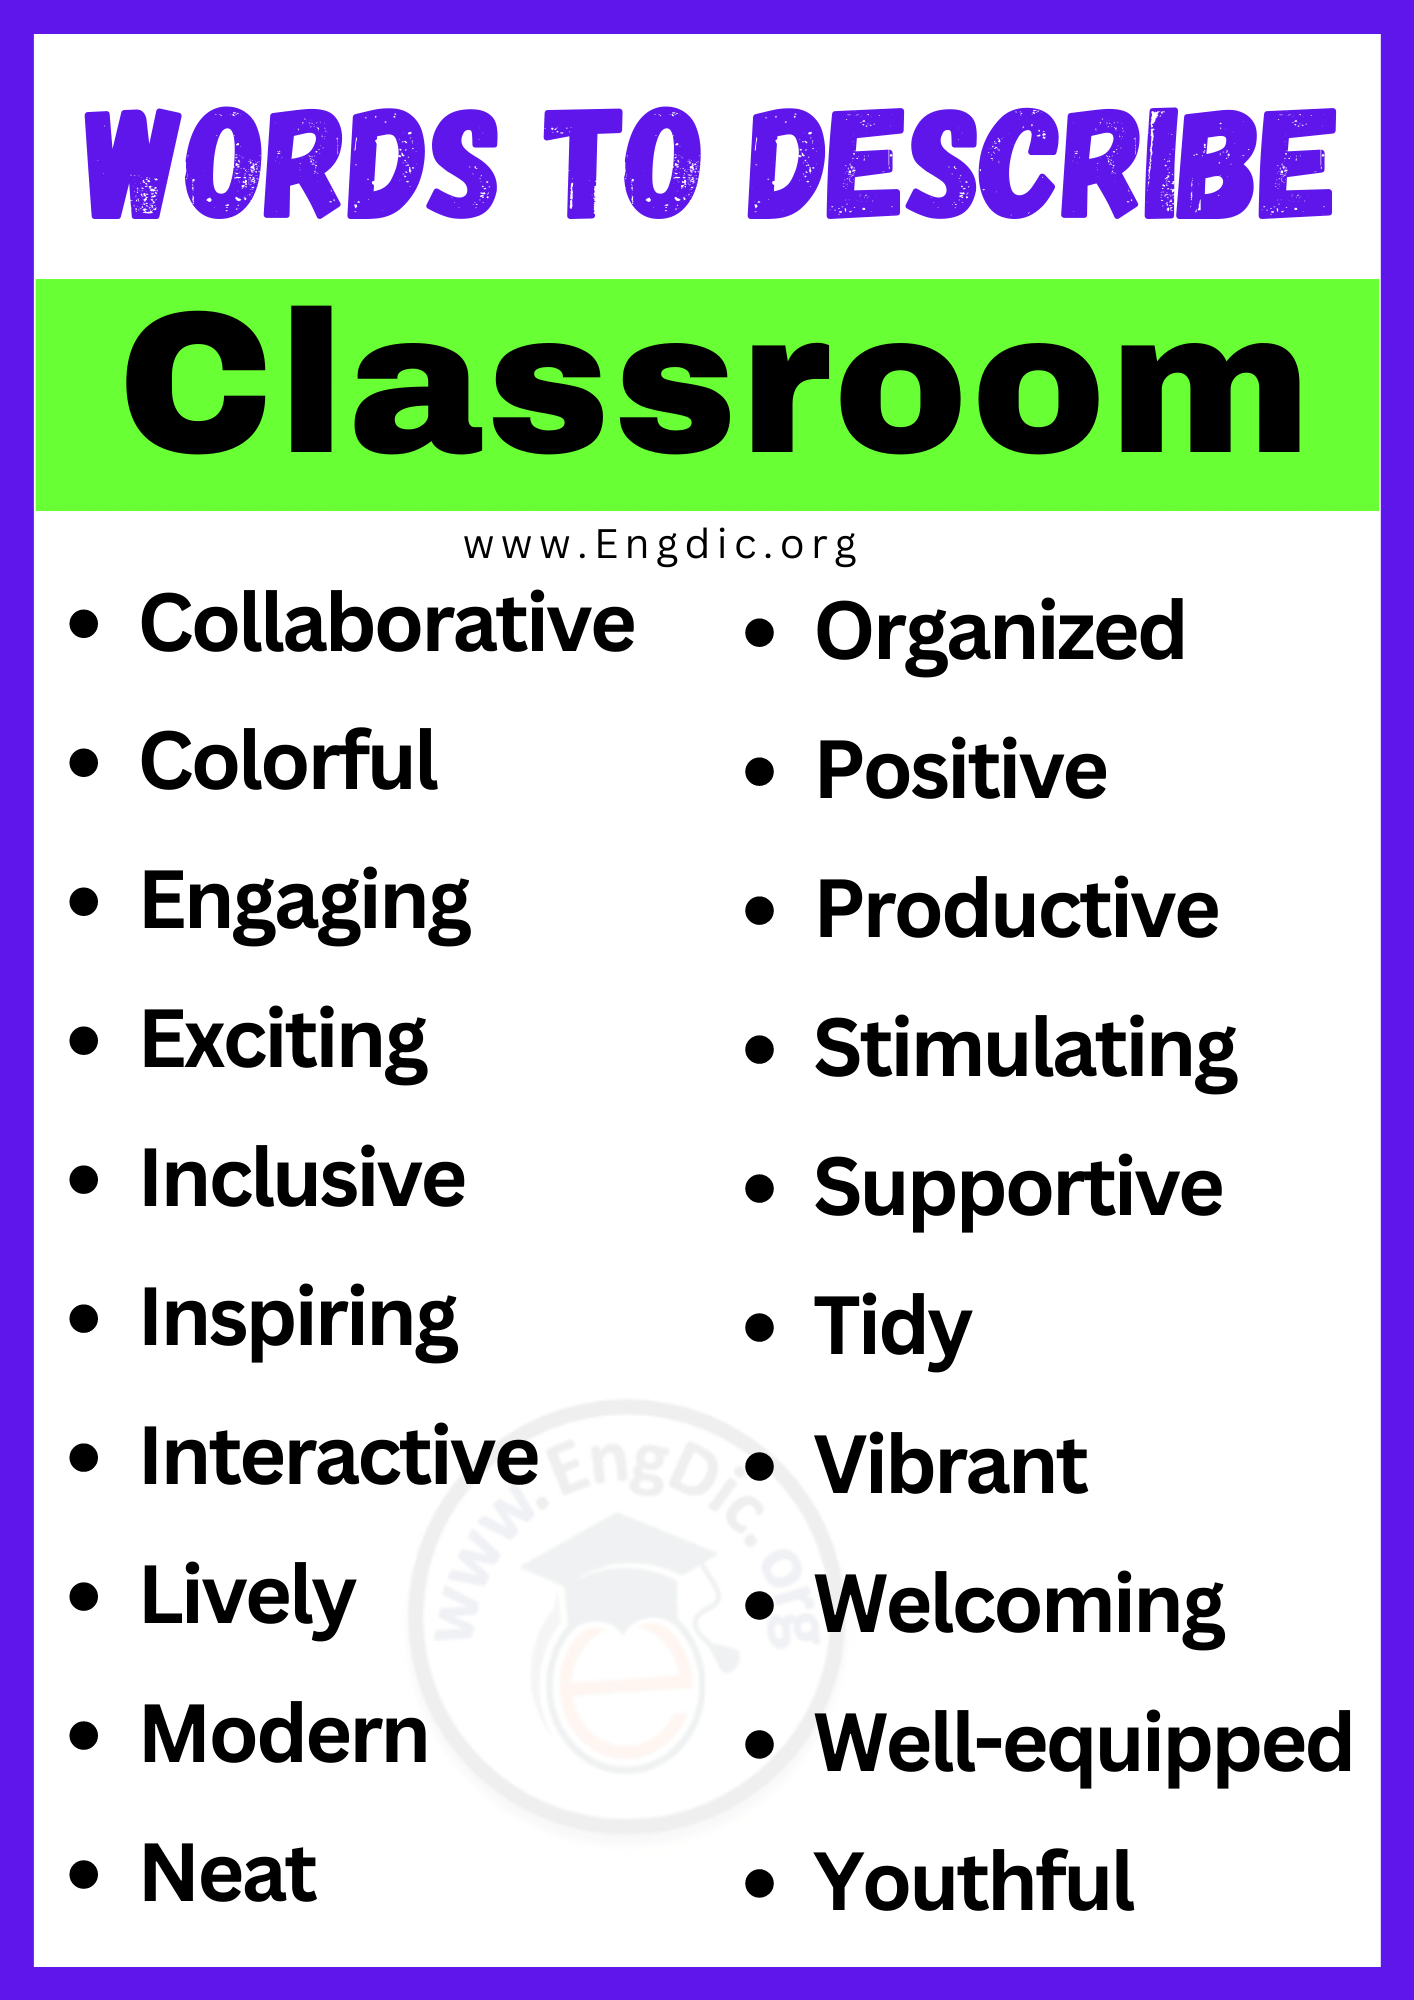 Words to Describe Classroom